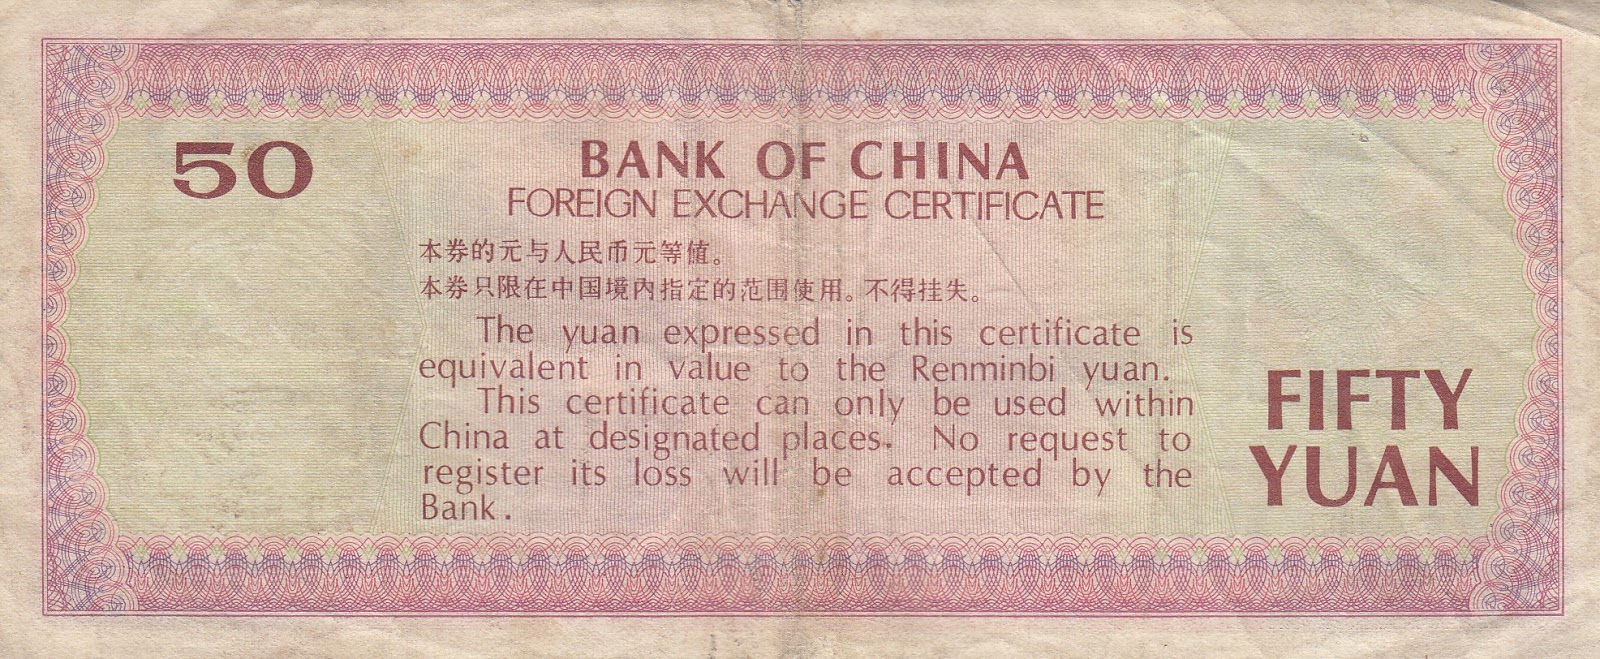 Купюра Китая 1988г. Foreign Exchange Certificate Bank of China. 50 1988 Китай. China China 1988.